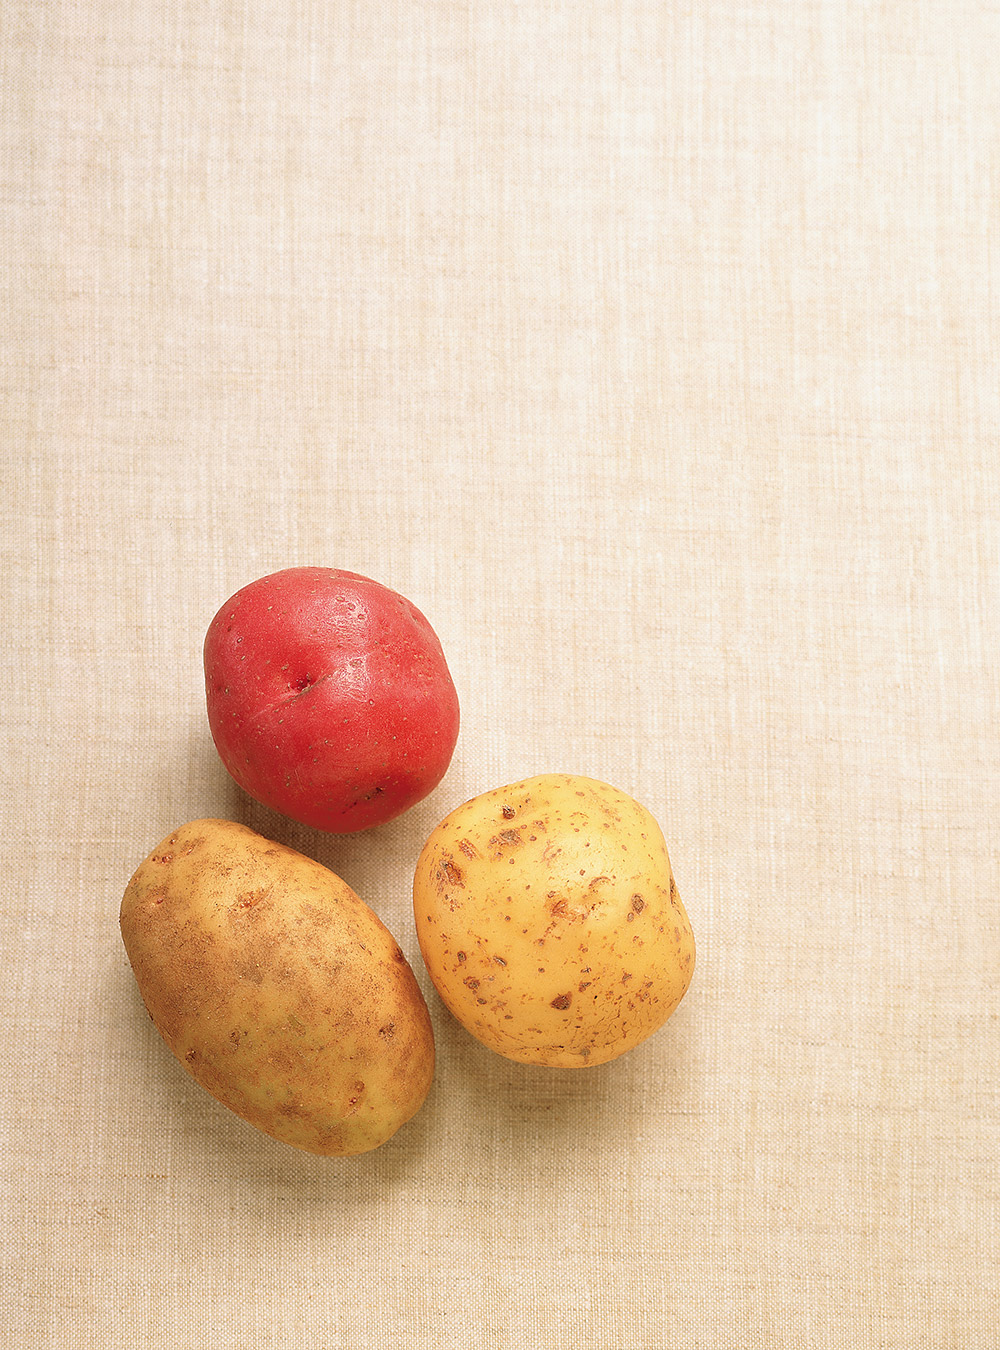 Scalloped Potatoes (Gratin Dauphinois)